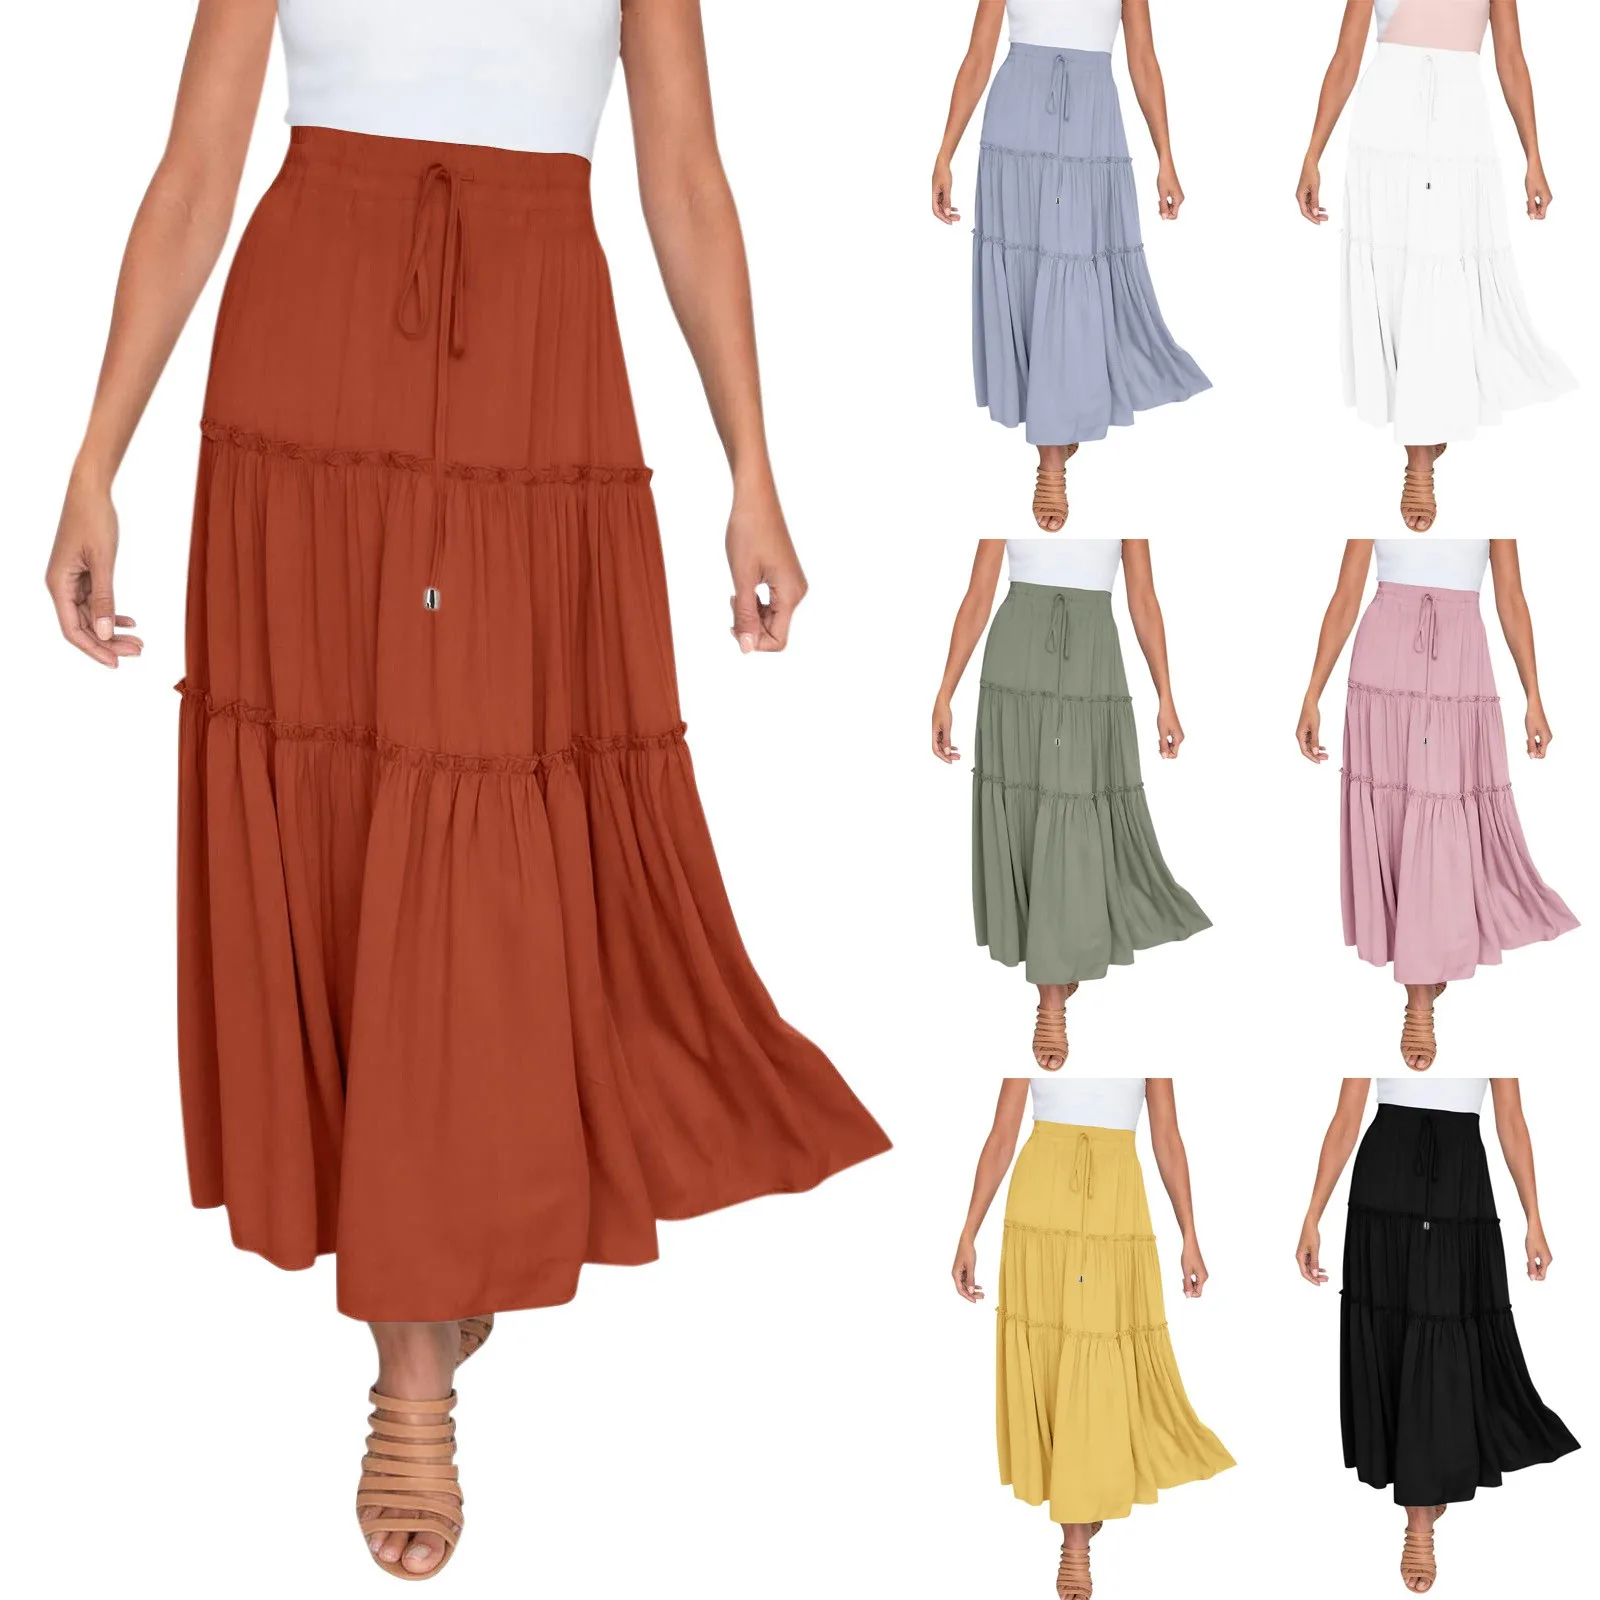 

Fla Skirts for Women Women’s Elastic High Waist Boho Maxi Skirt Ruffle A Line Swing Long Skirts Skirt with Slit Petite